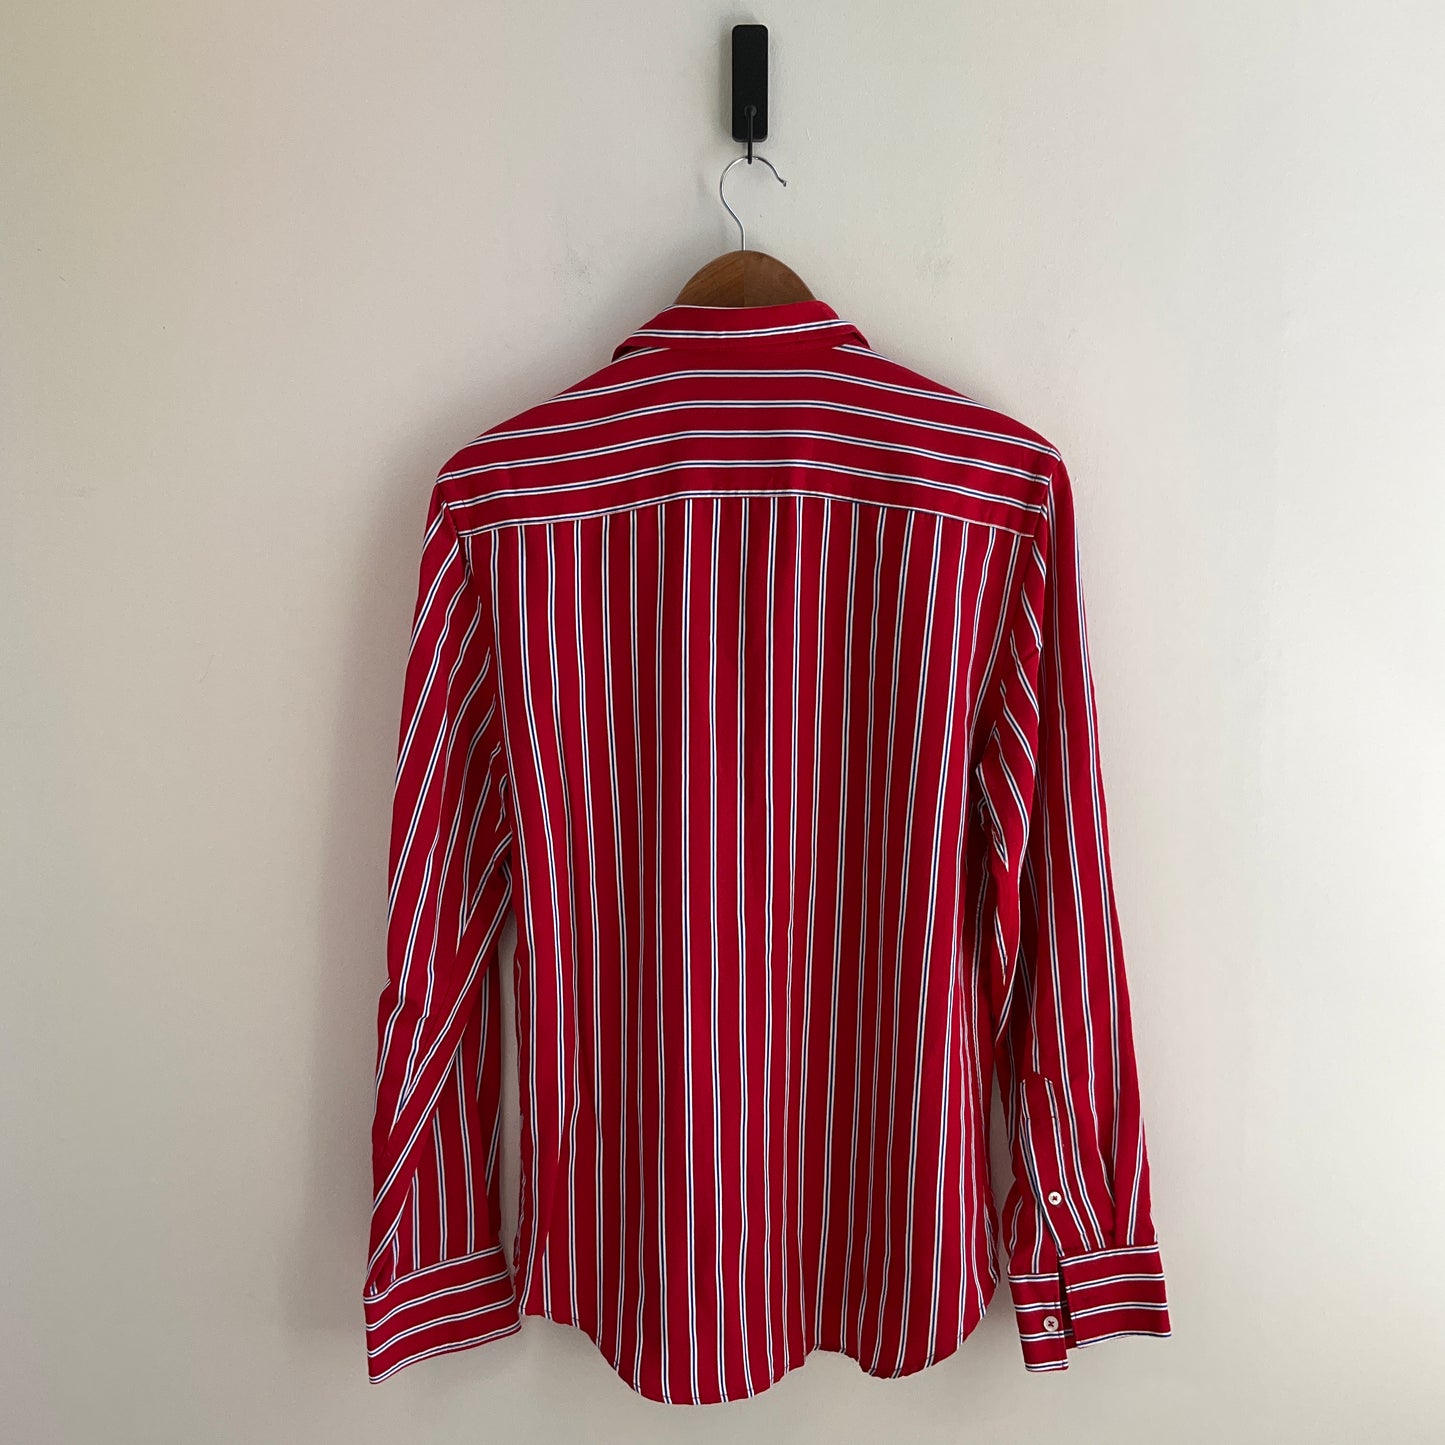 Zara Man - Red Stripped Shirt